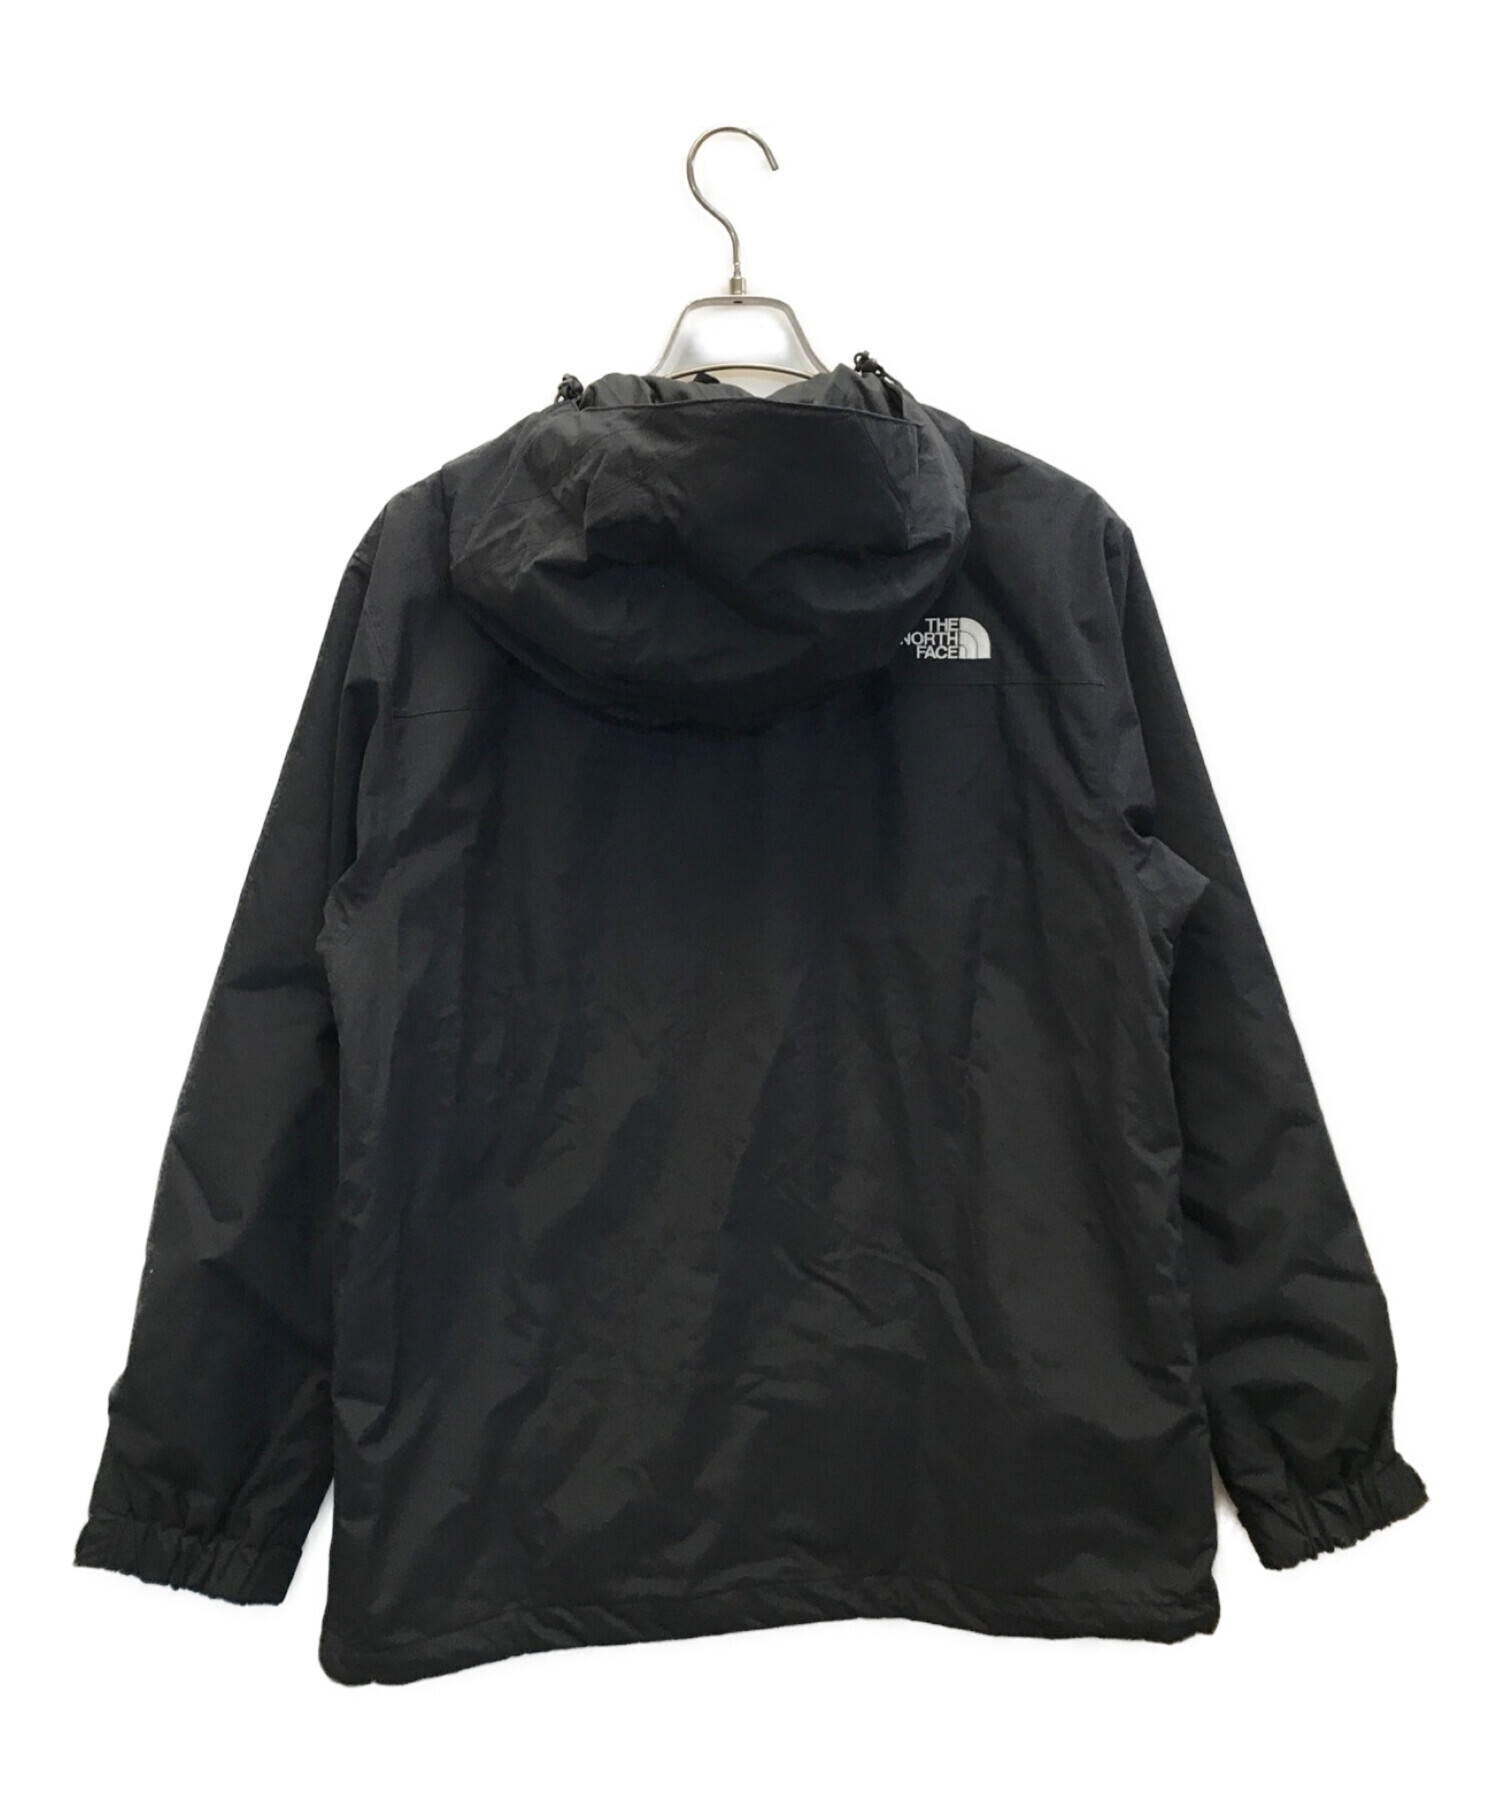 The North Face Scoop Jacket Black Lサイズ